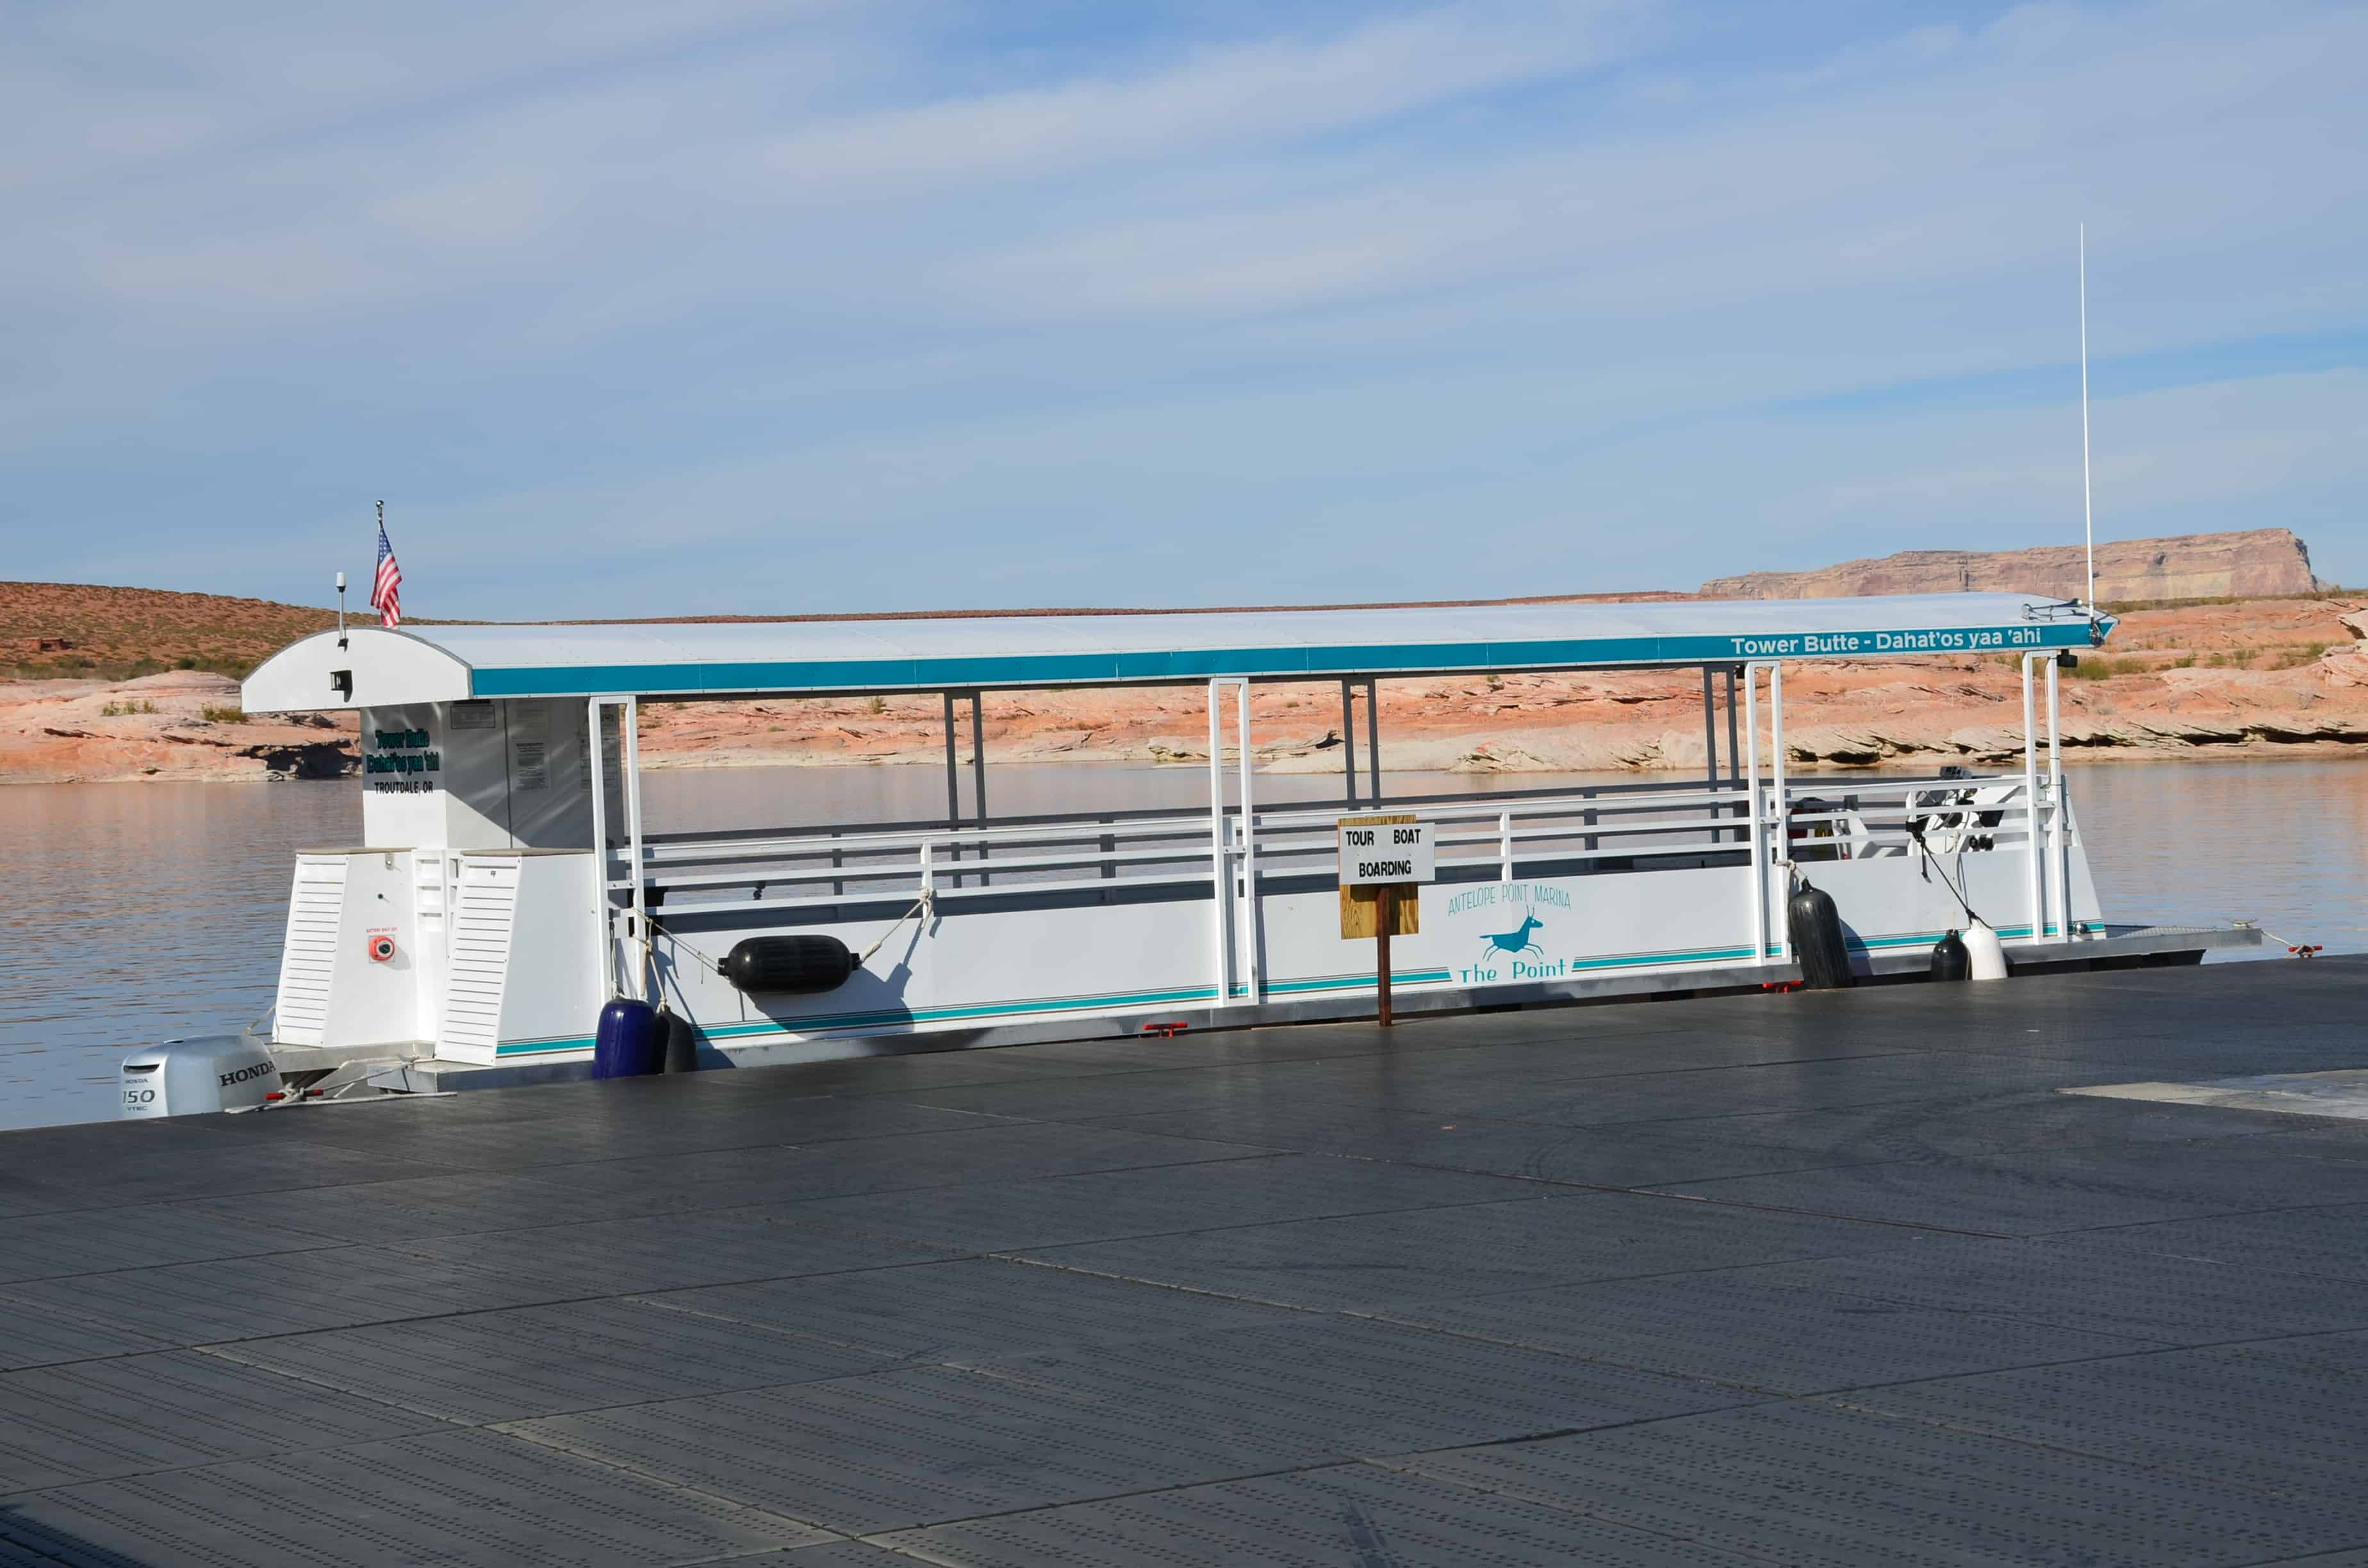 The boat at Antelope Point Marina in Glen Canyon National Recreation Area in Arizona